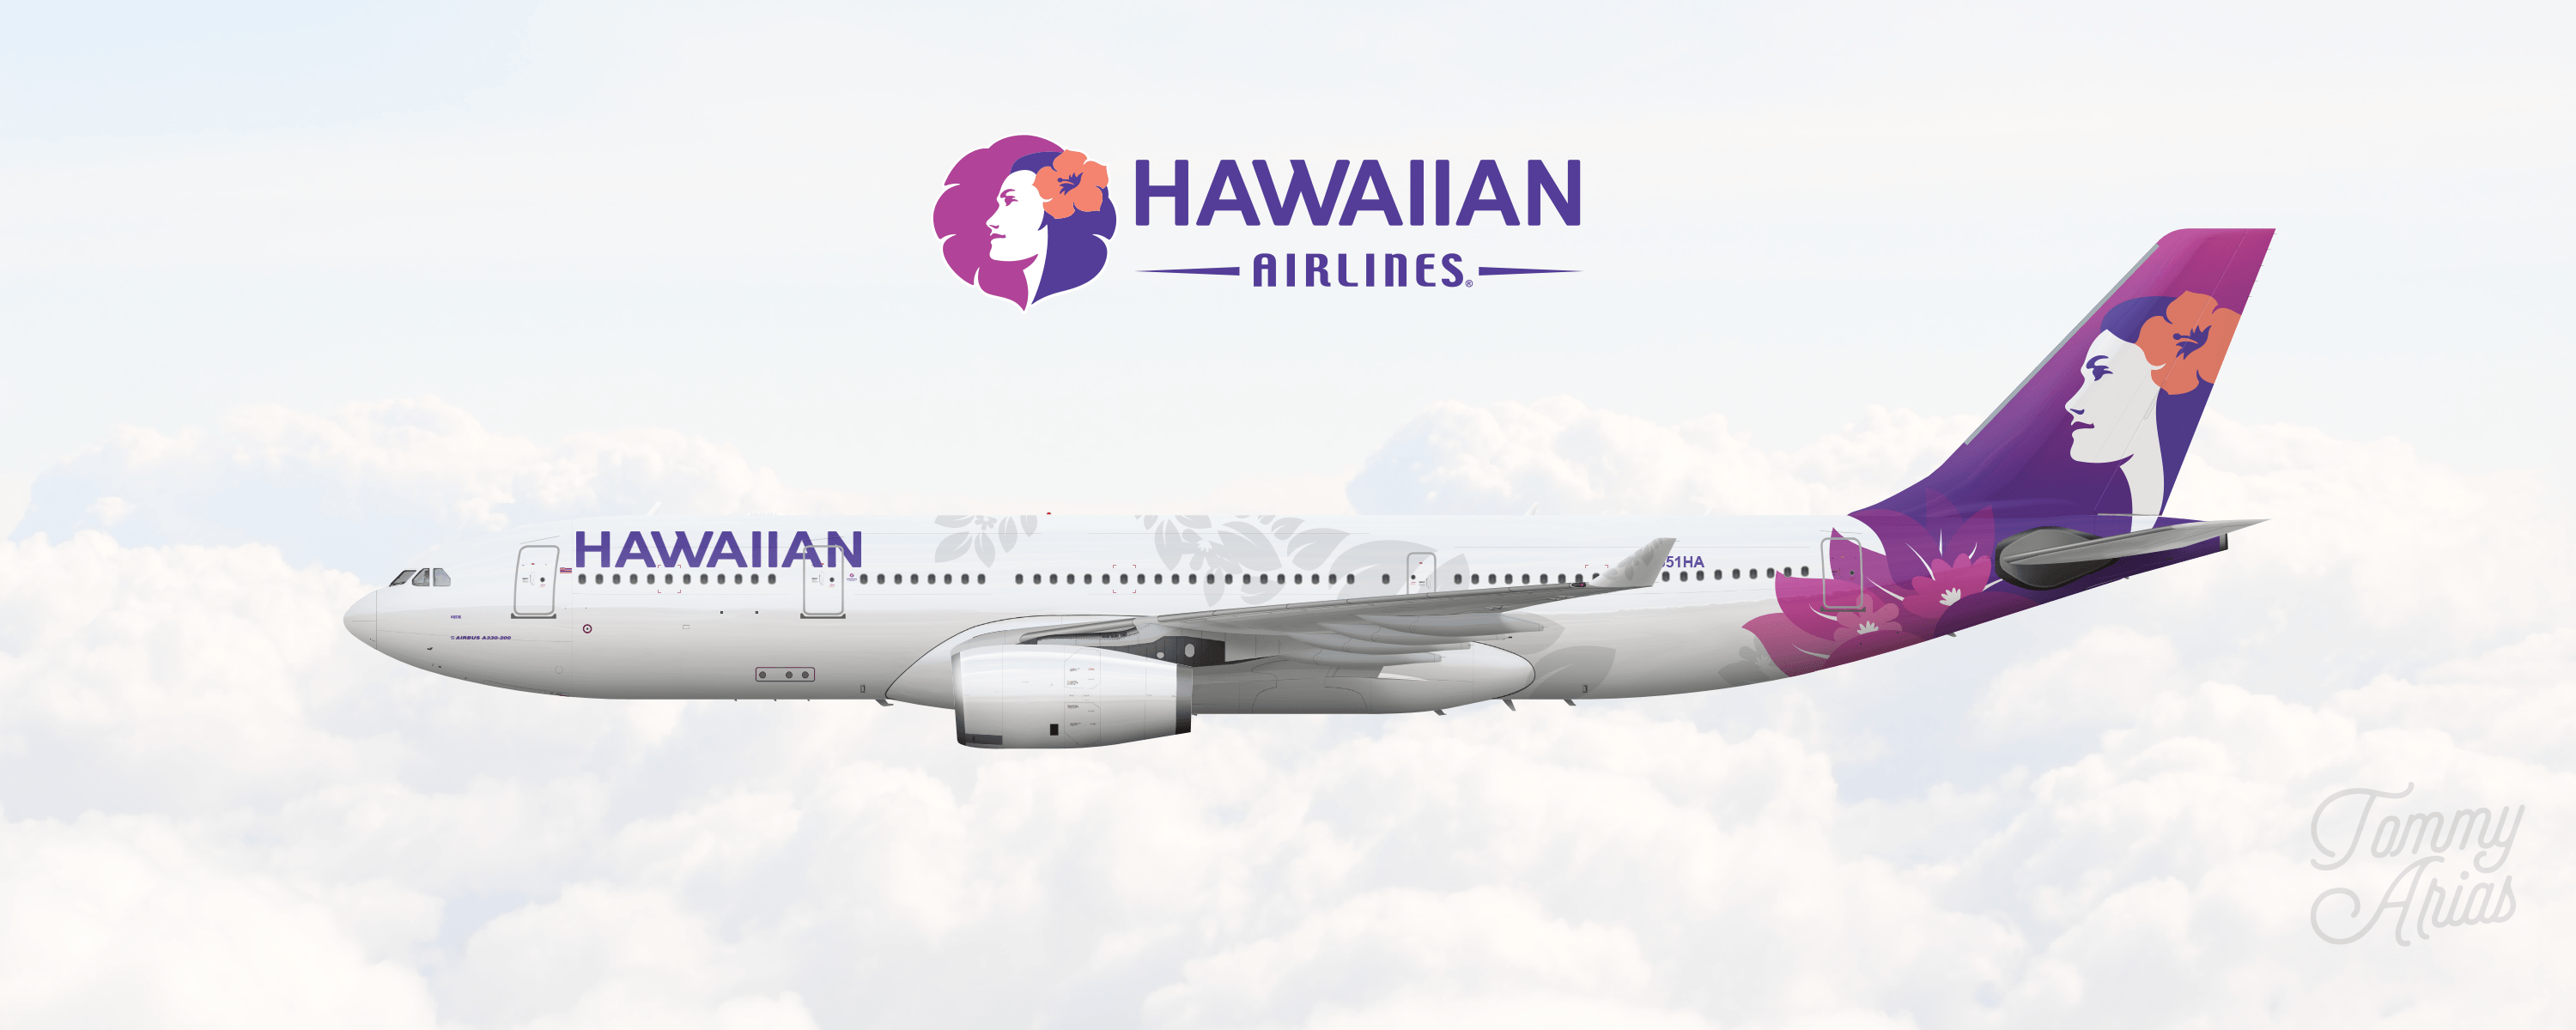 Hawaiian Airlines New Logo - GeminiJets leaks new Hawaiian Airlines livery